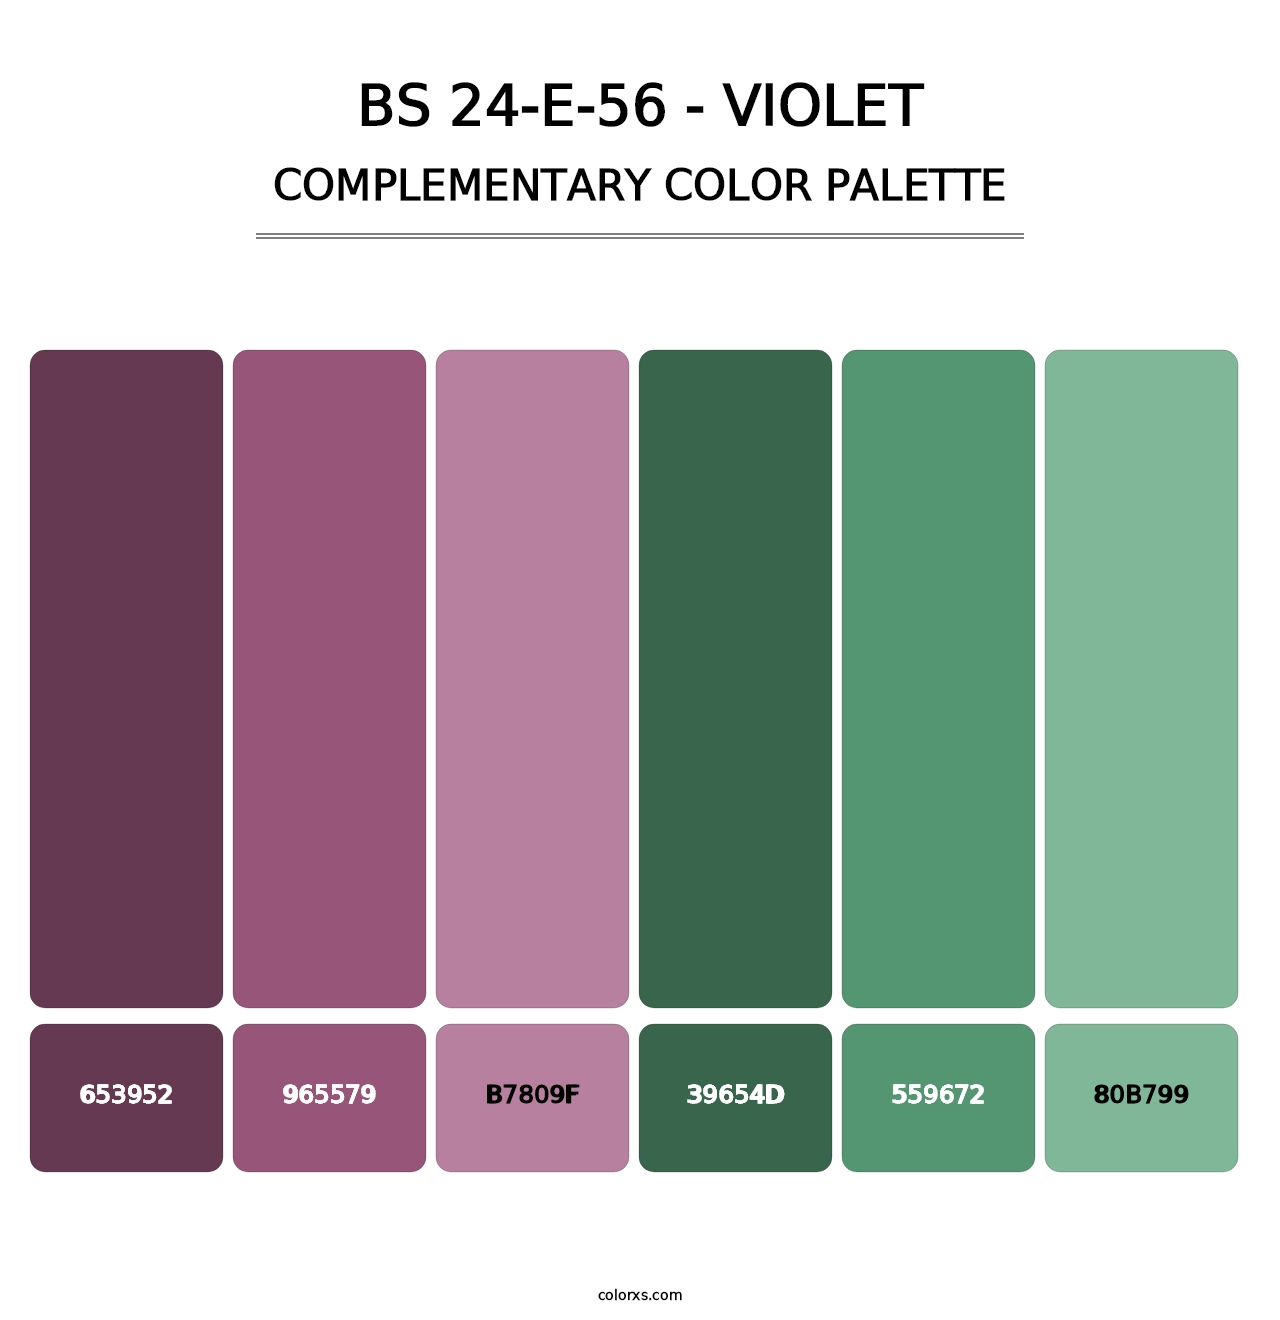 BS 24-E-56 - Violet - Complementary Color Palette